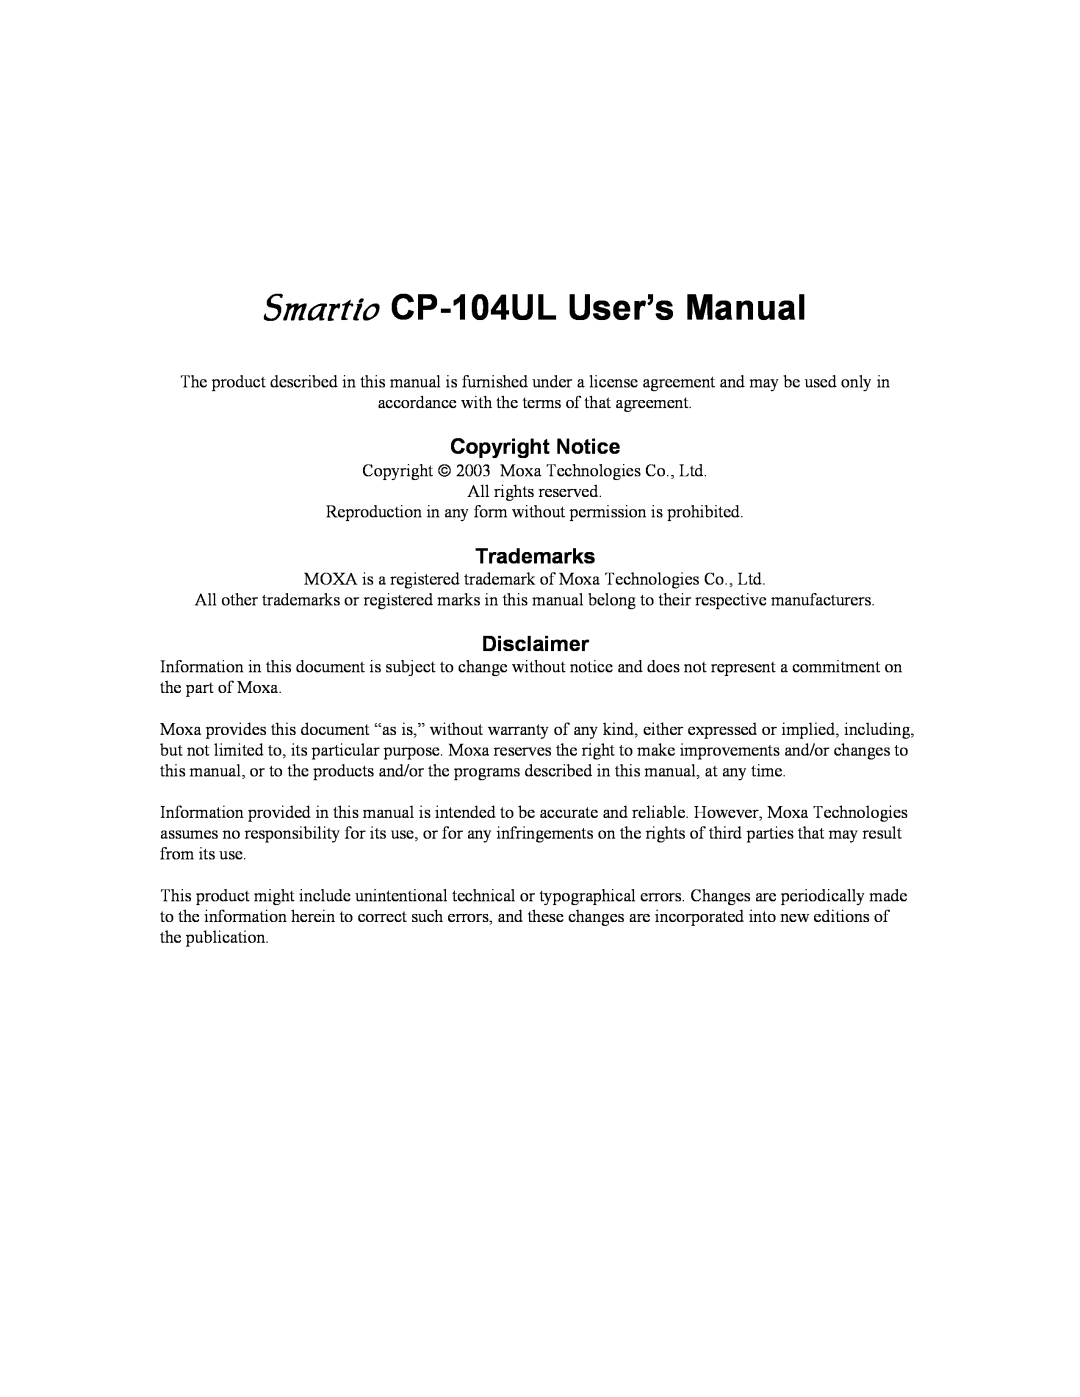 Moxa Technologies user manual Smartio CP-104UL User’s Manual, Copyright Notice, Trademarks, Disclaimer 